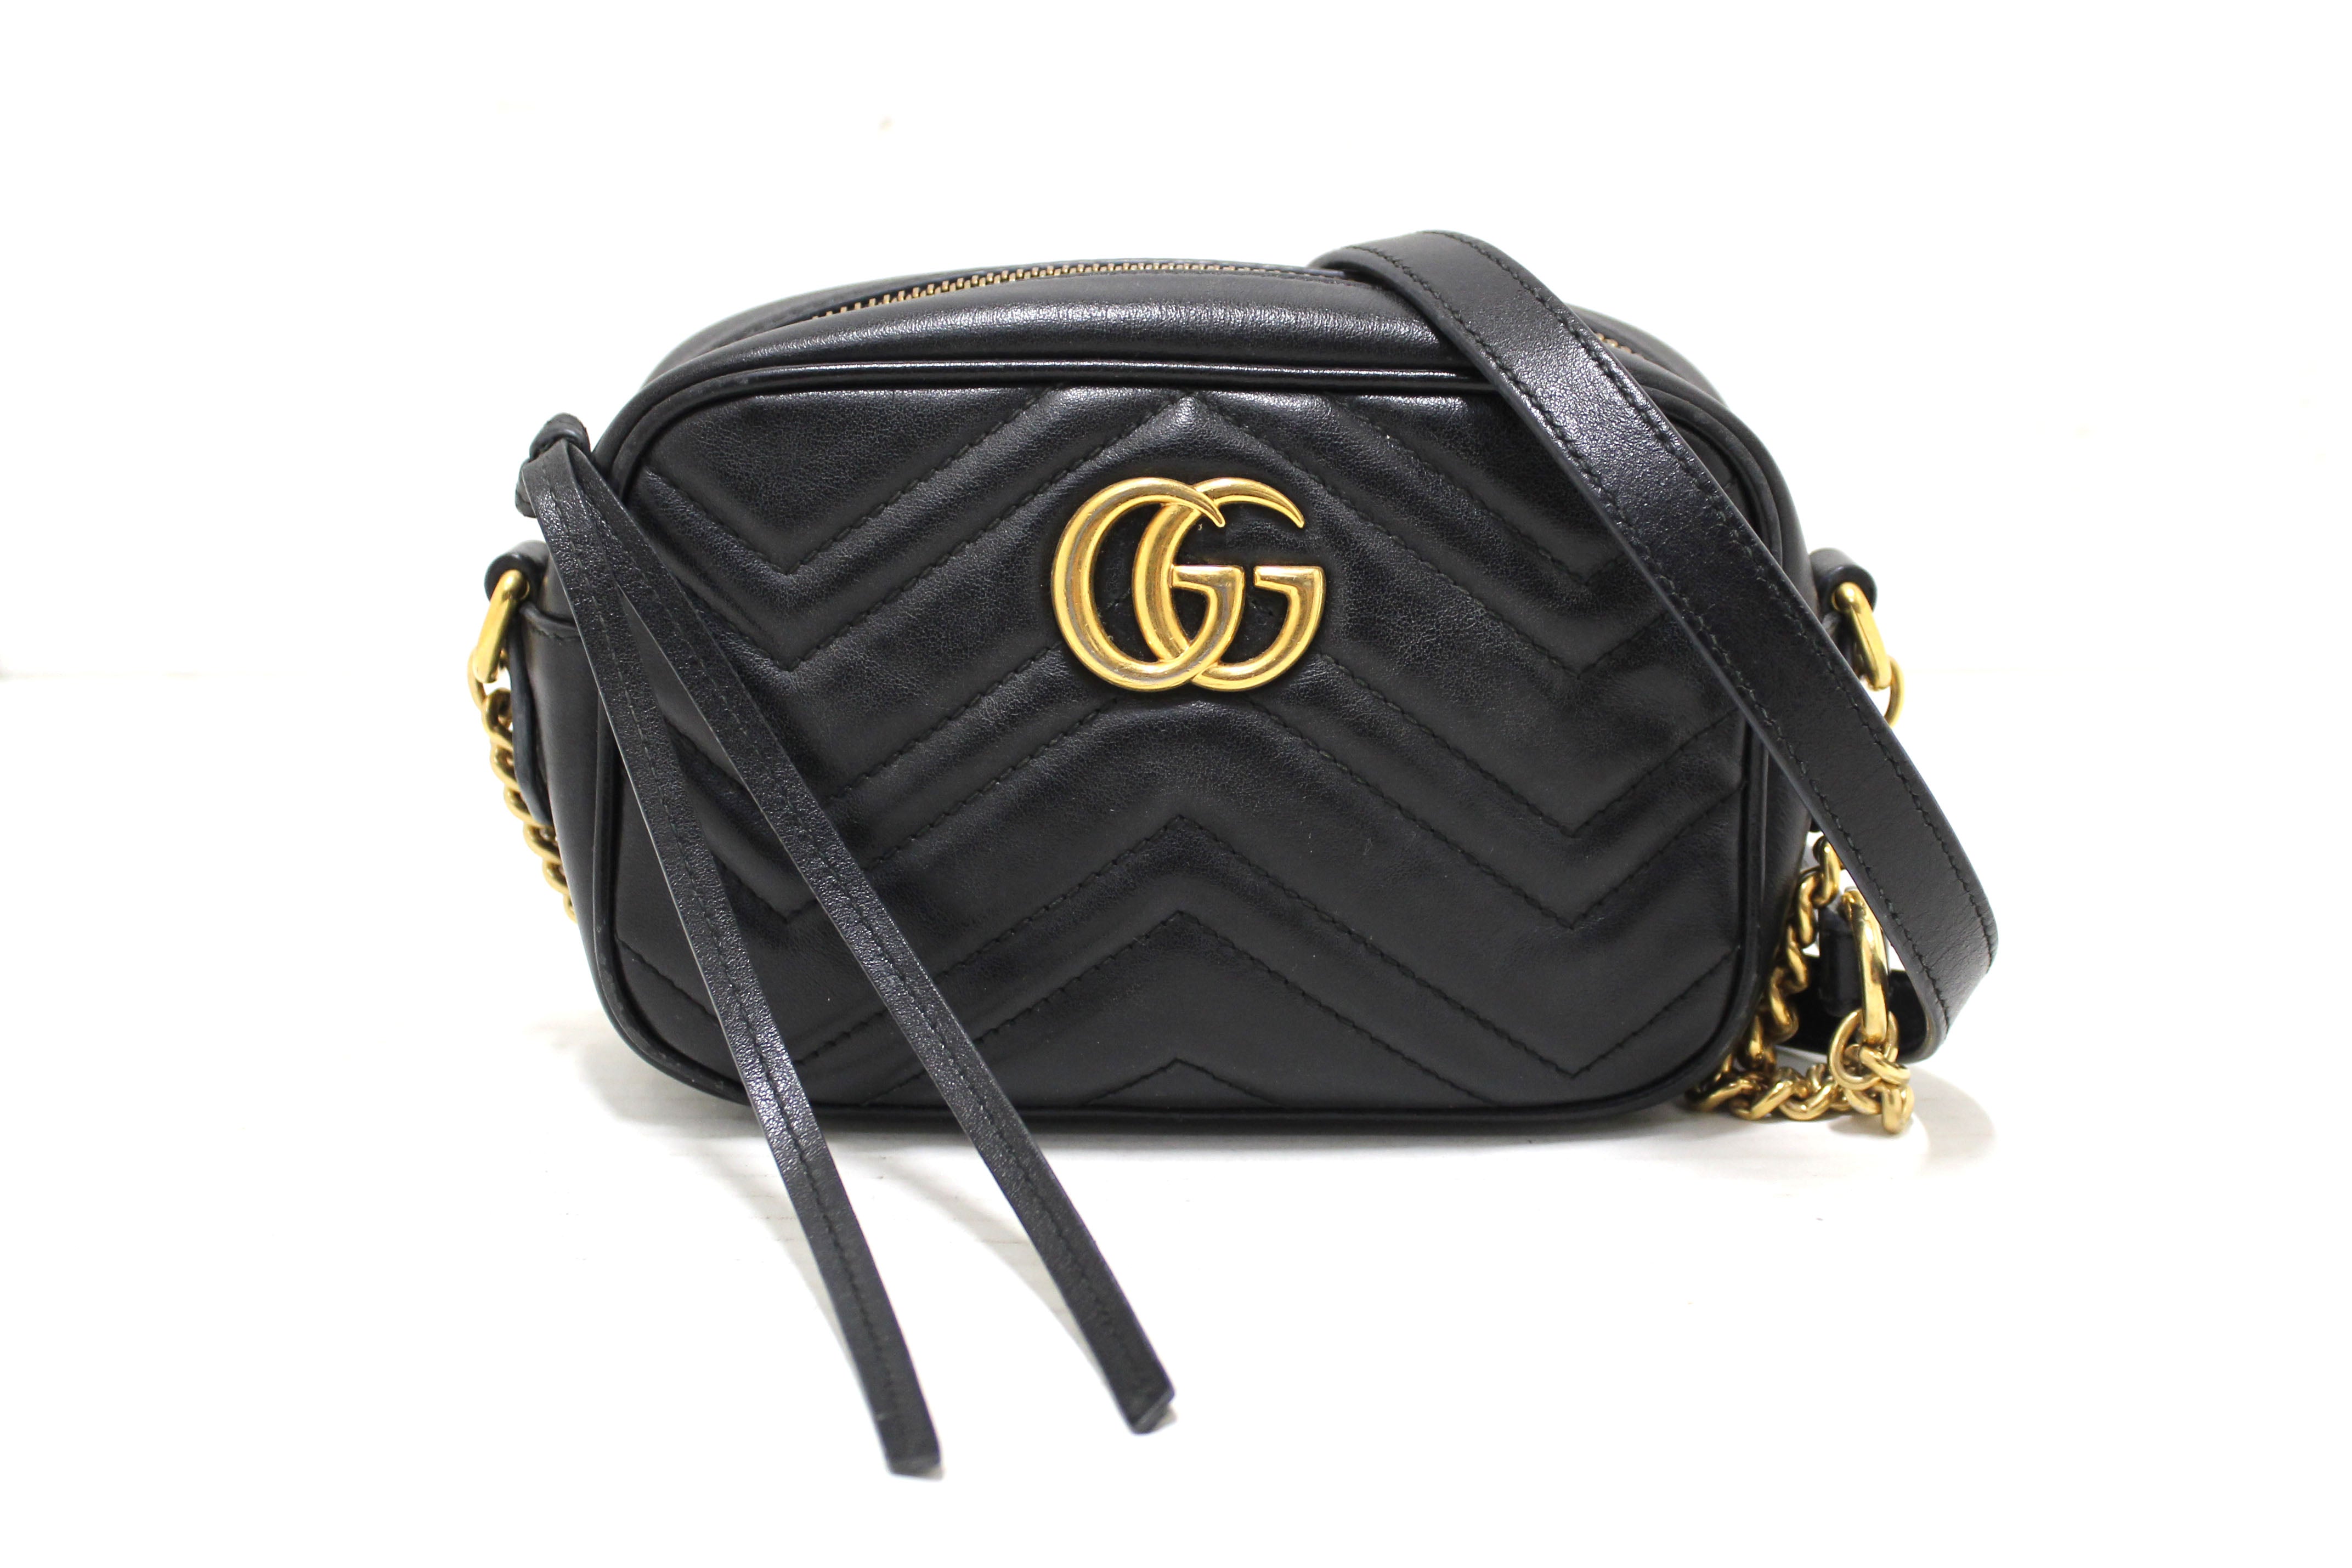 Black Leather GG Marmont Matelassé Mini Bag Zip Top Closure